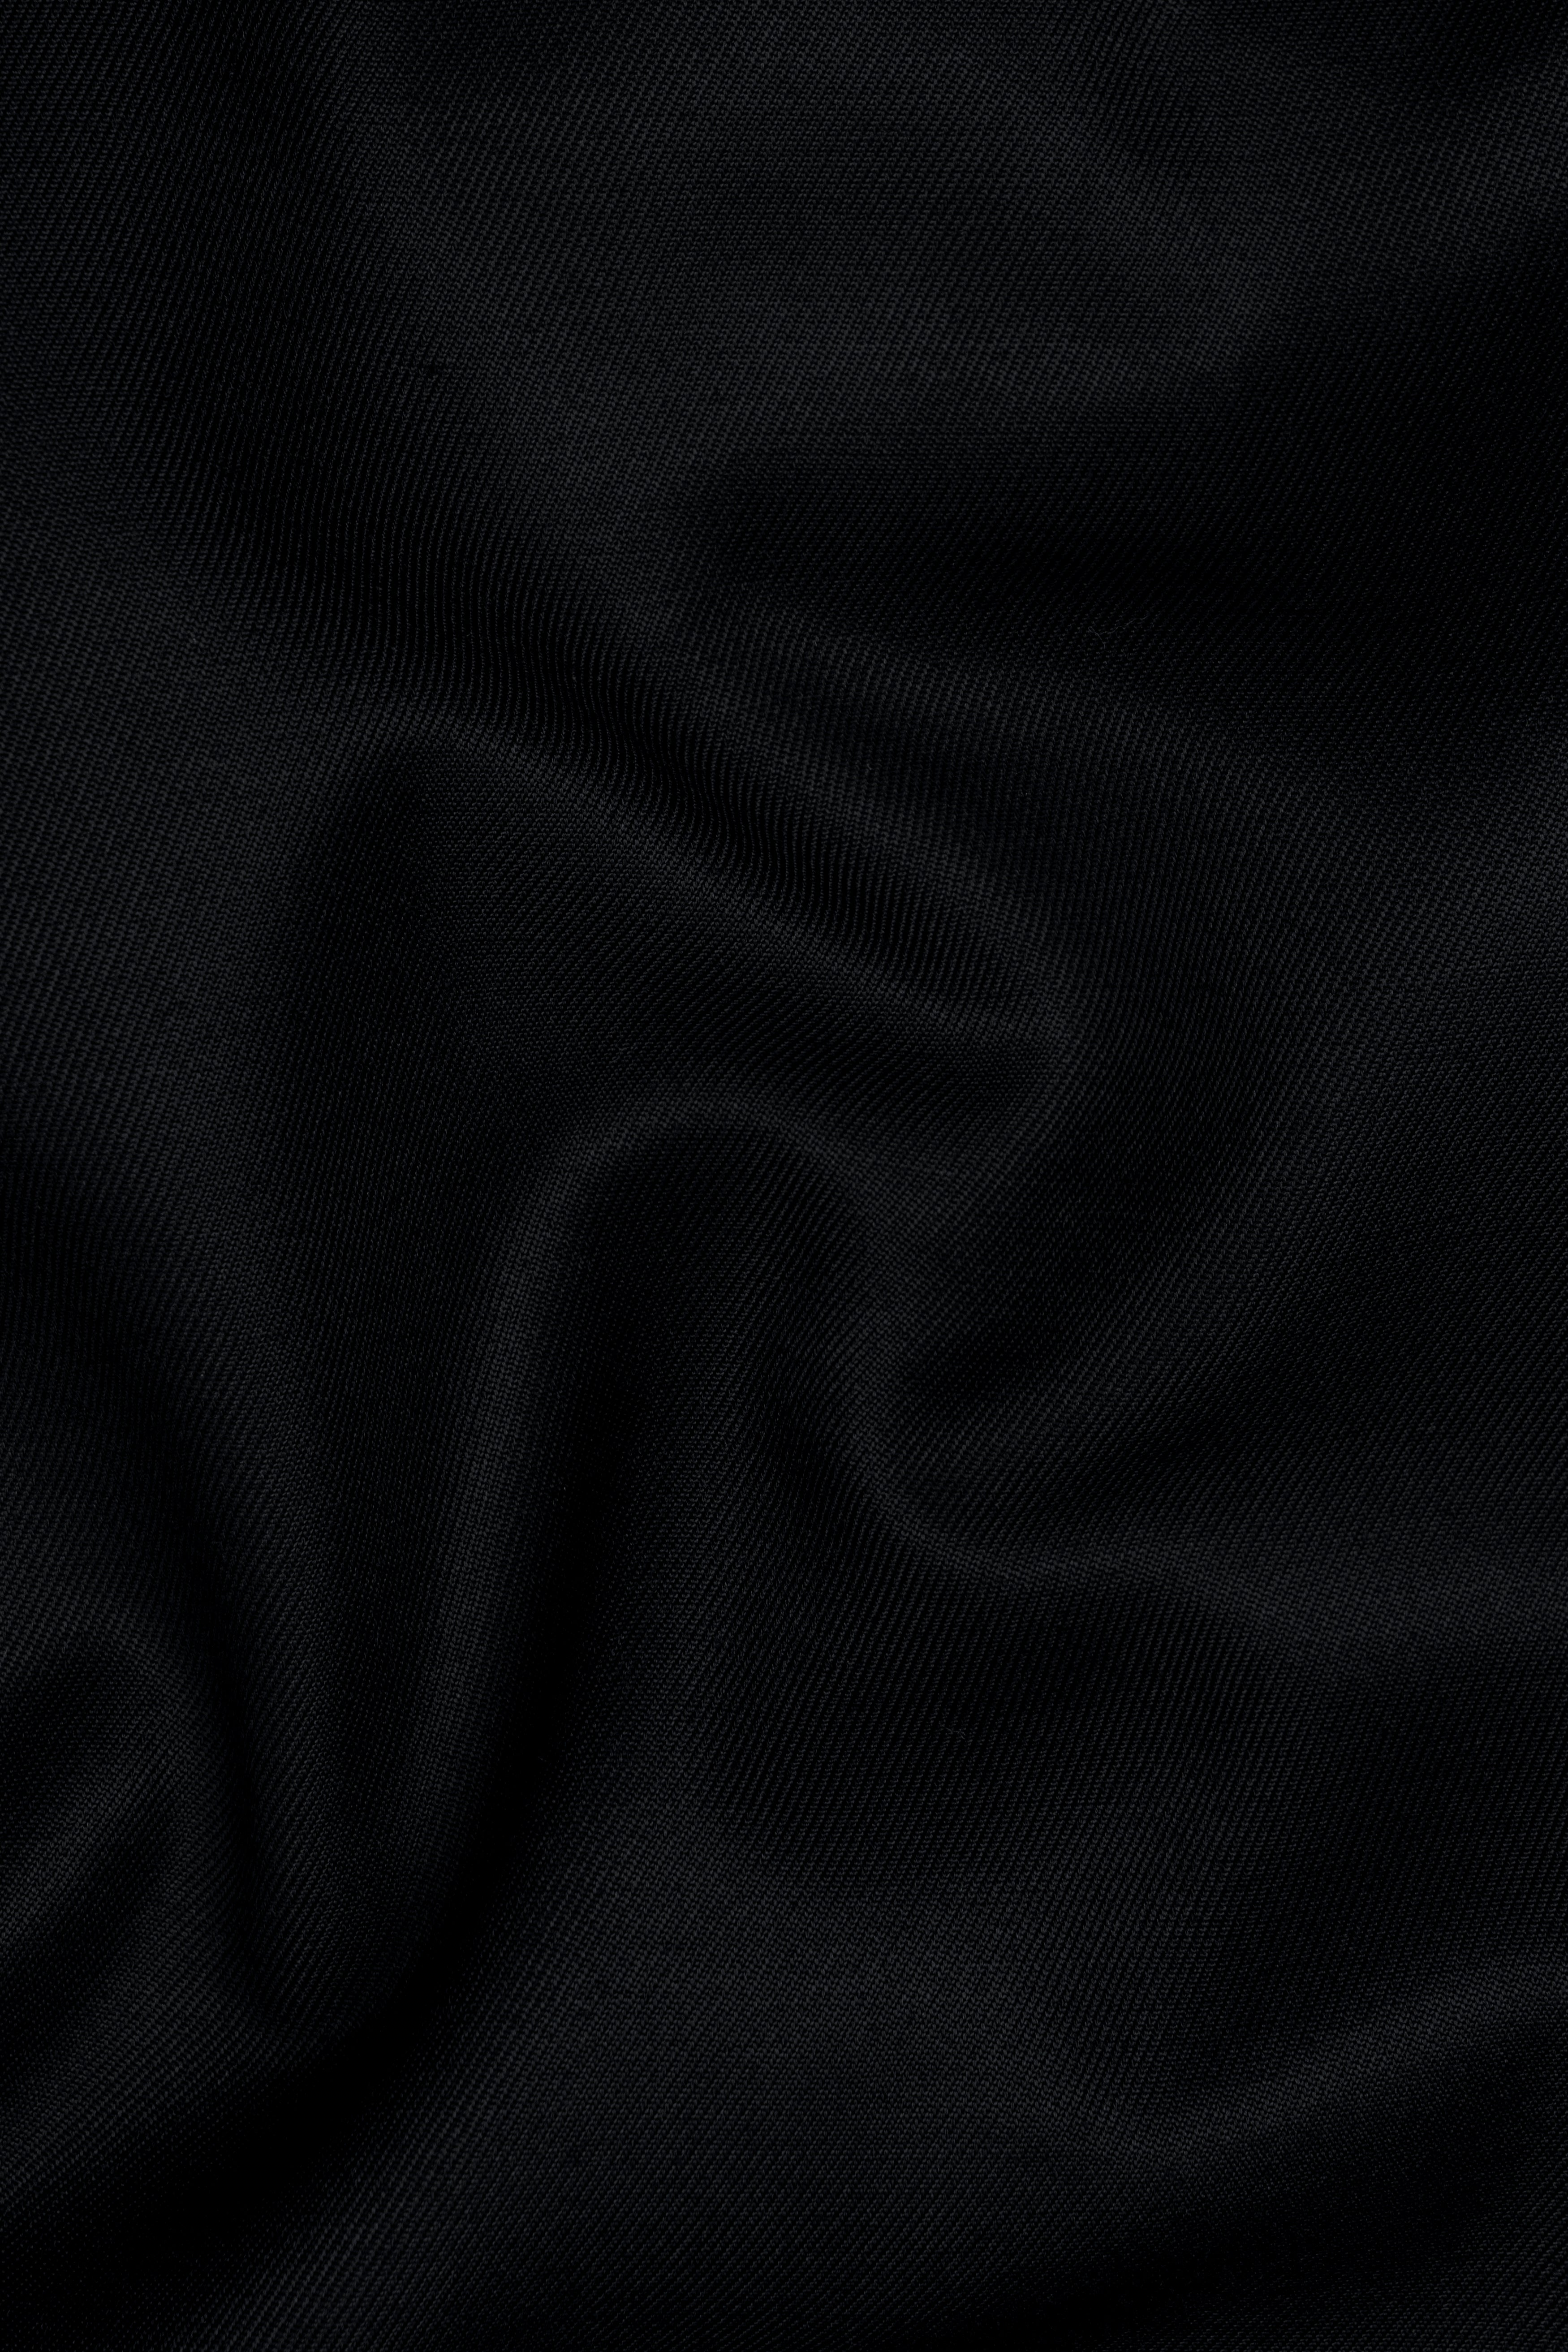 Jade Black Plain Solid Wool Blend Waistcoat